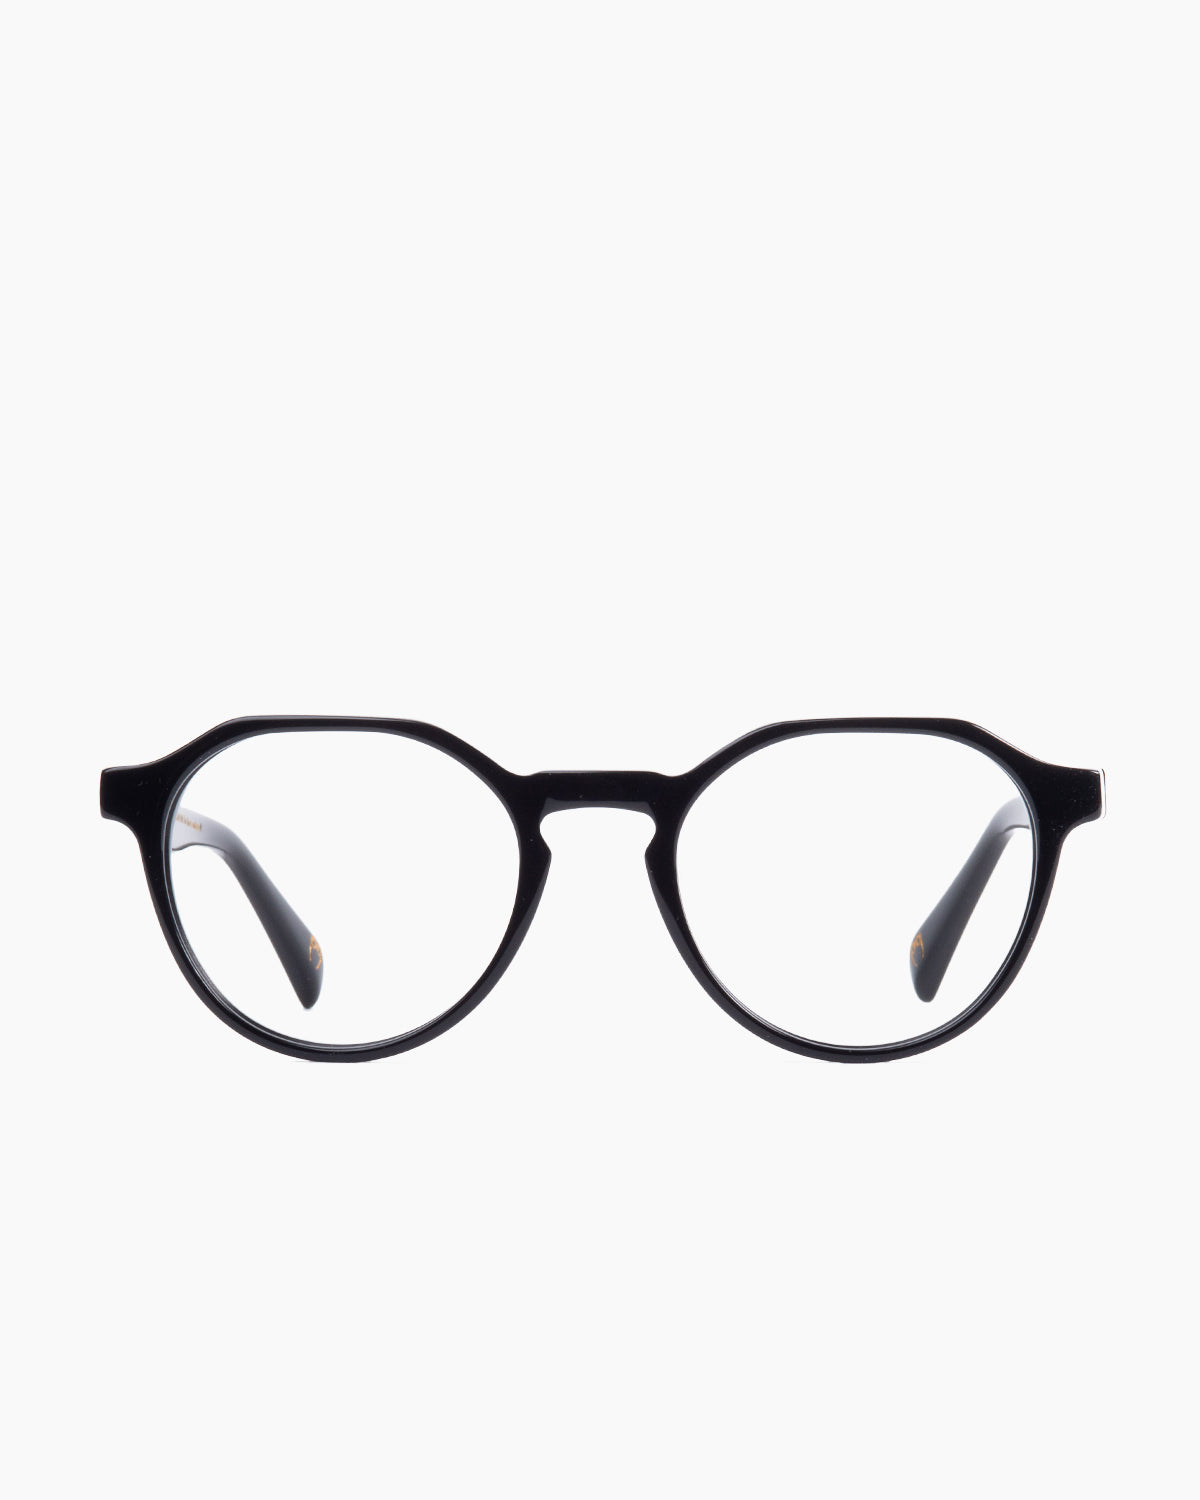 Spectacleeyeworks - Amir - 306 | Bar à lunettes:  Marie-Sophie Dion